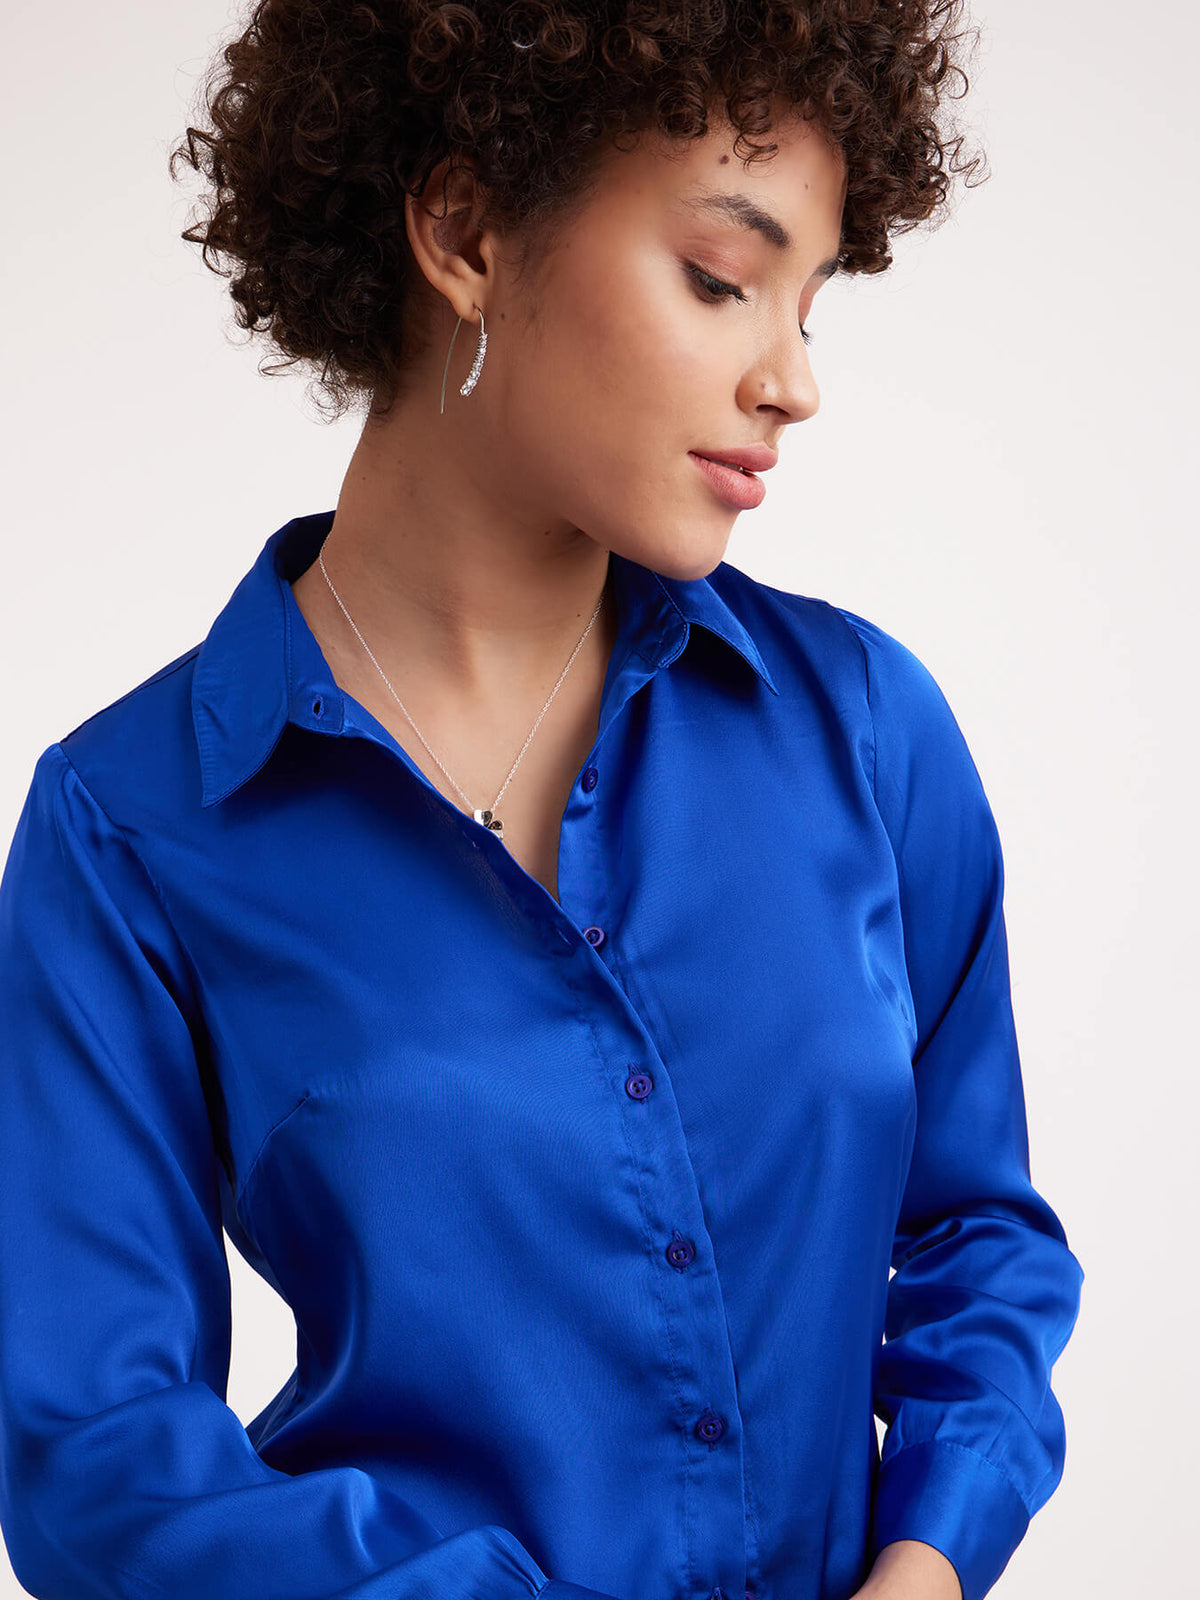 Satin Collared Shirt - Royal Blue